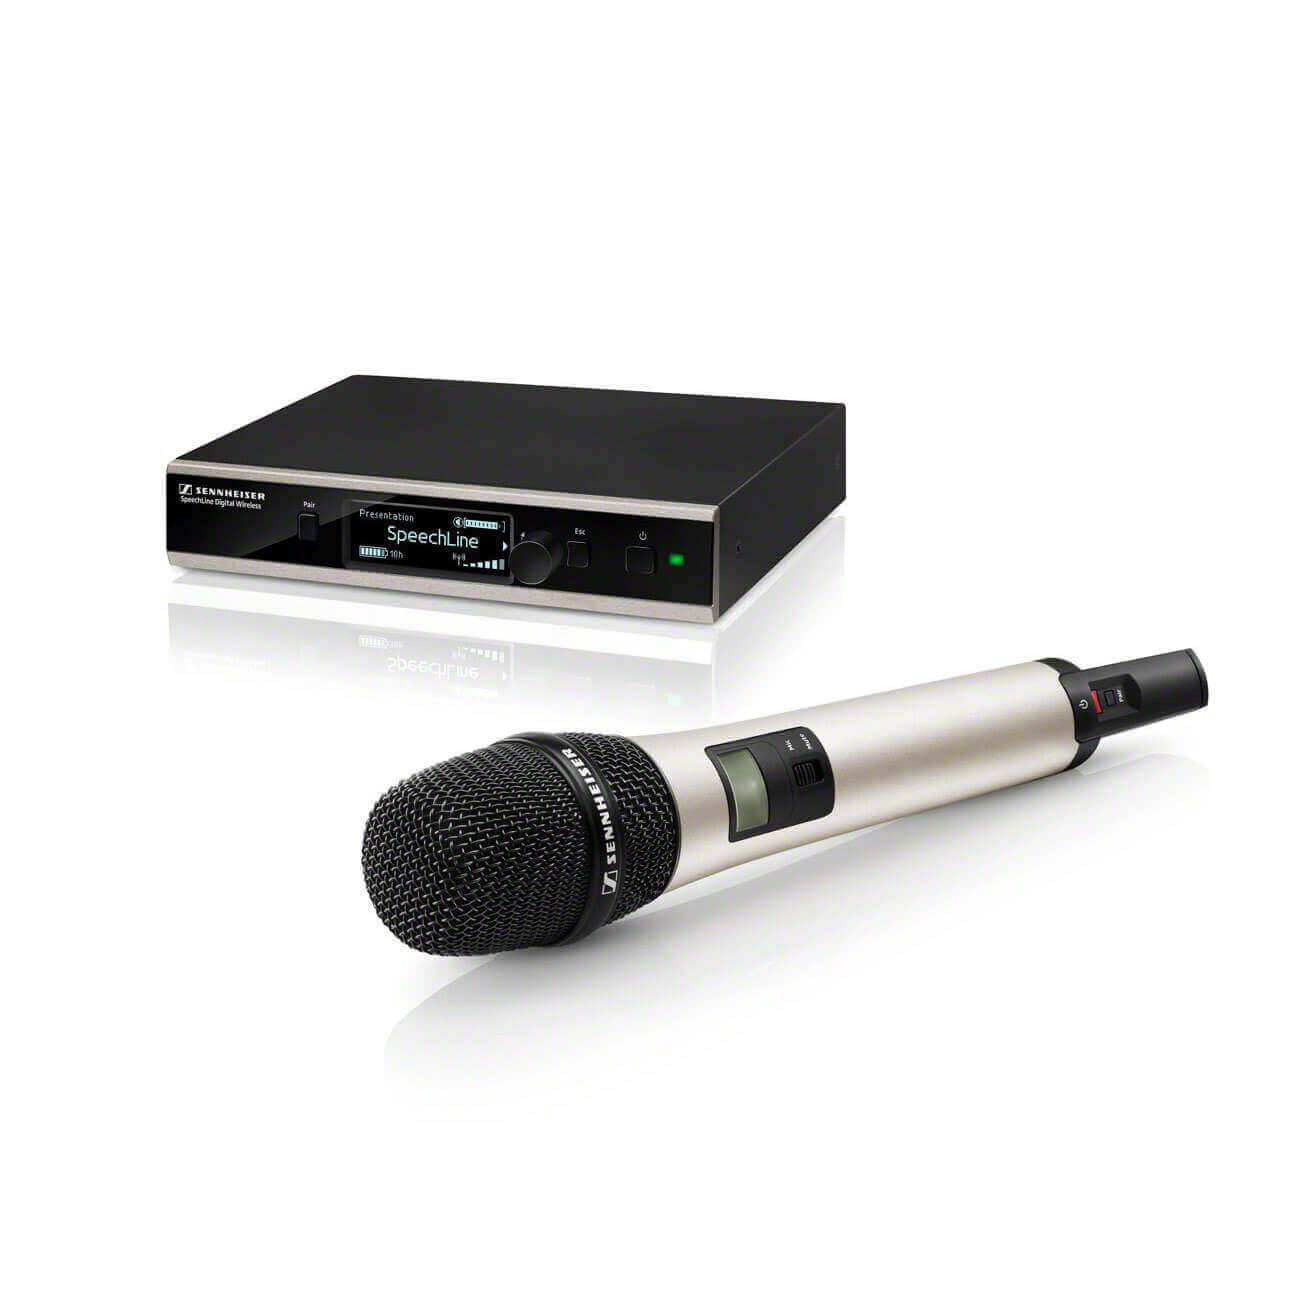 Sennheiser sl handheld set micrófono inalámbrico rm con kit de montaje en bastidor